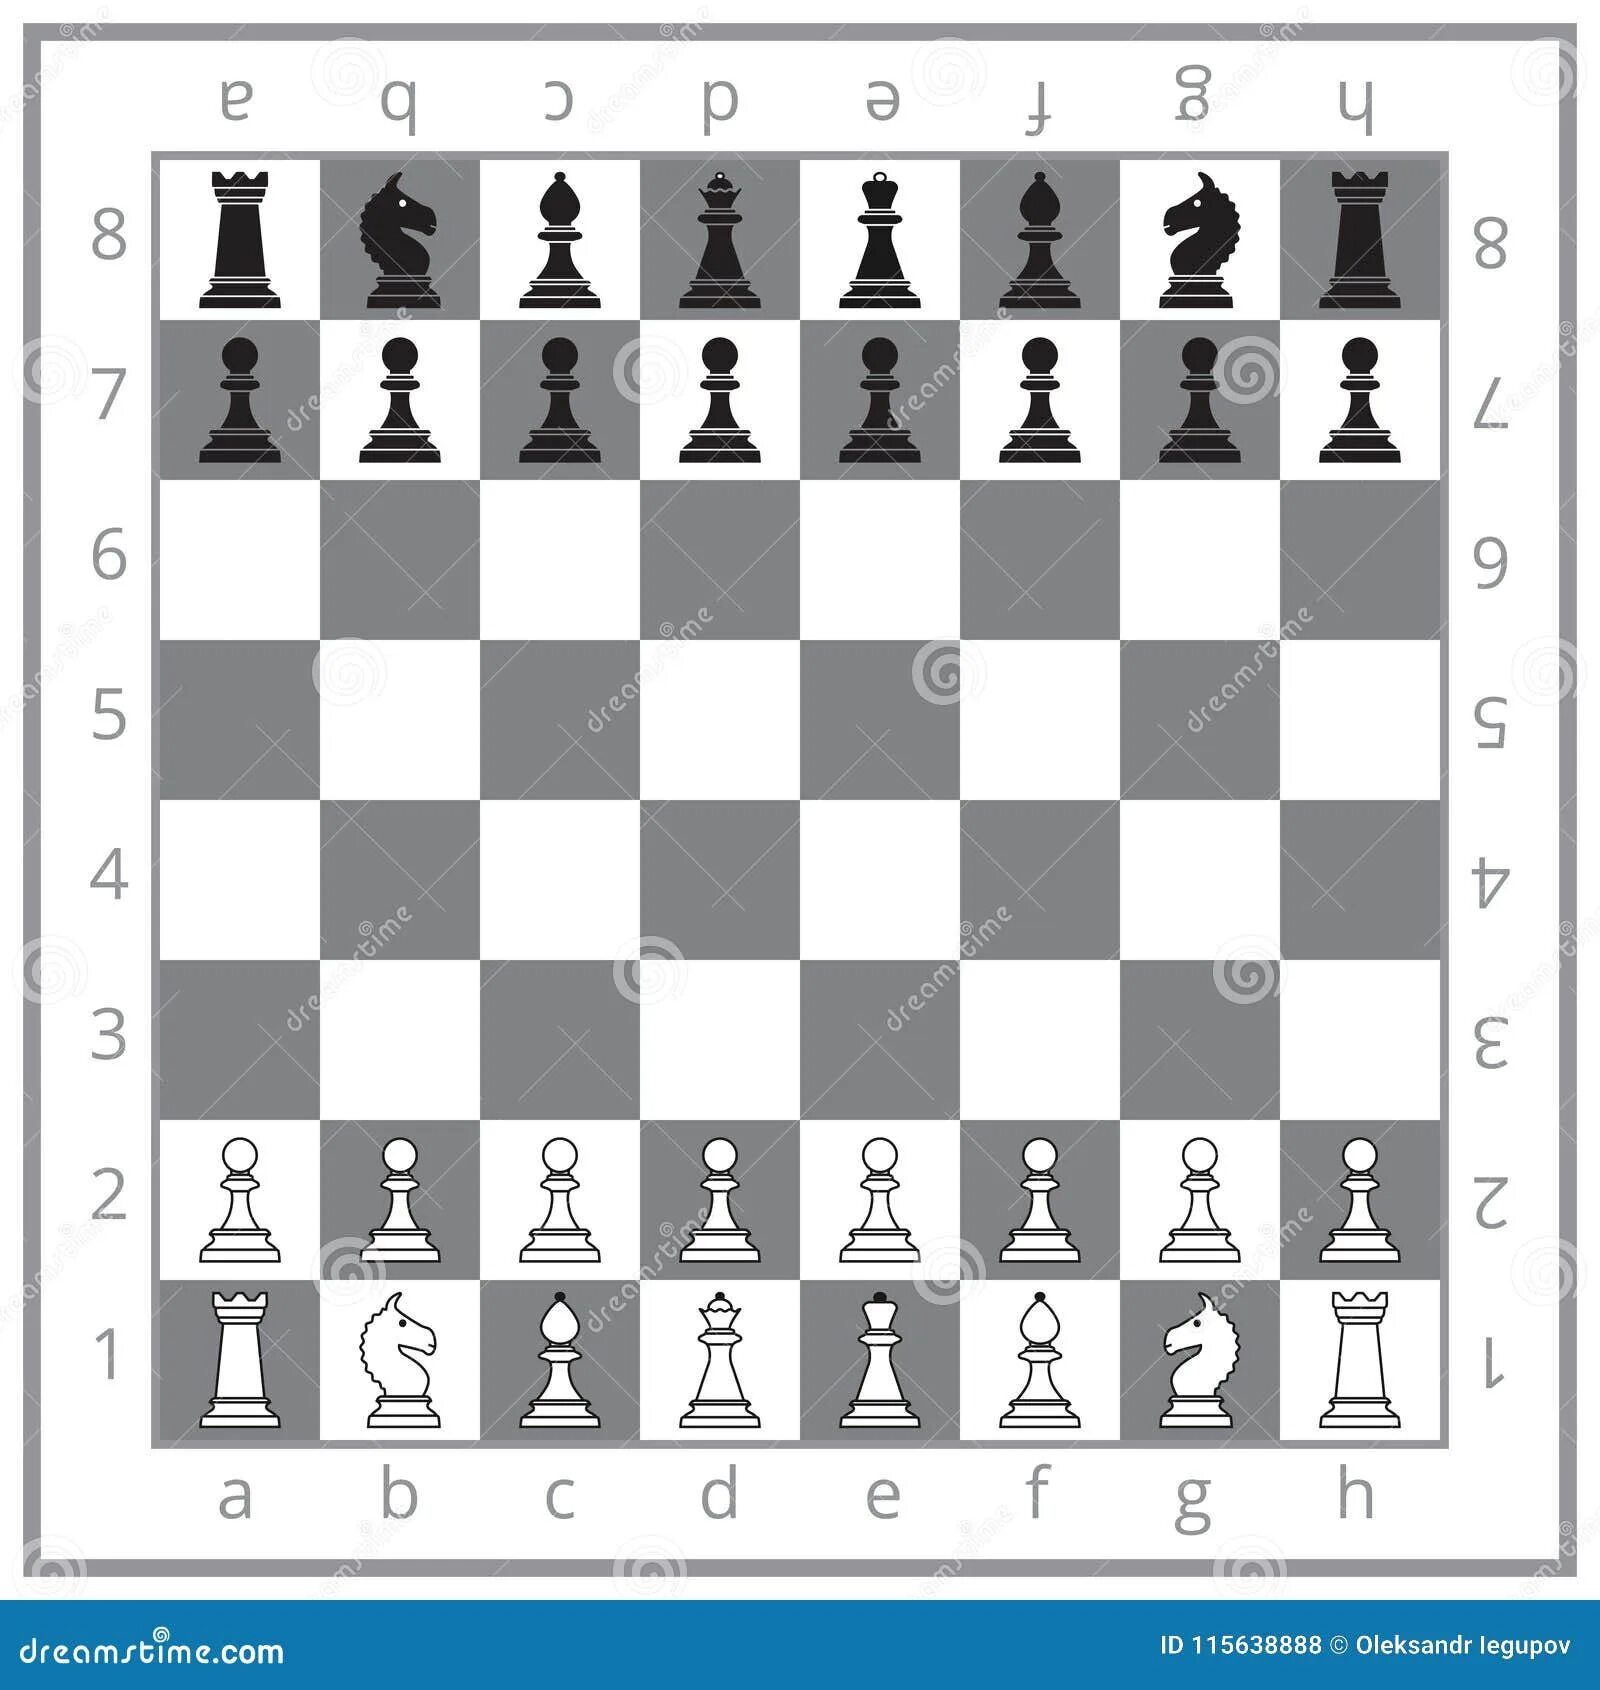 На шахматной доске 5 белых фигур. Расстановка шахмат в шахматах. Правильная расстановка шахмат. Расположение фигур в шахматах. Начальная позиция фигур на шахматной доске.